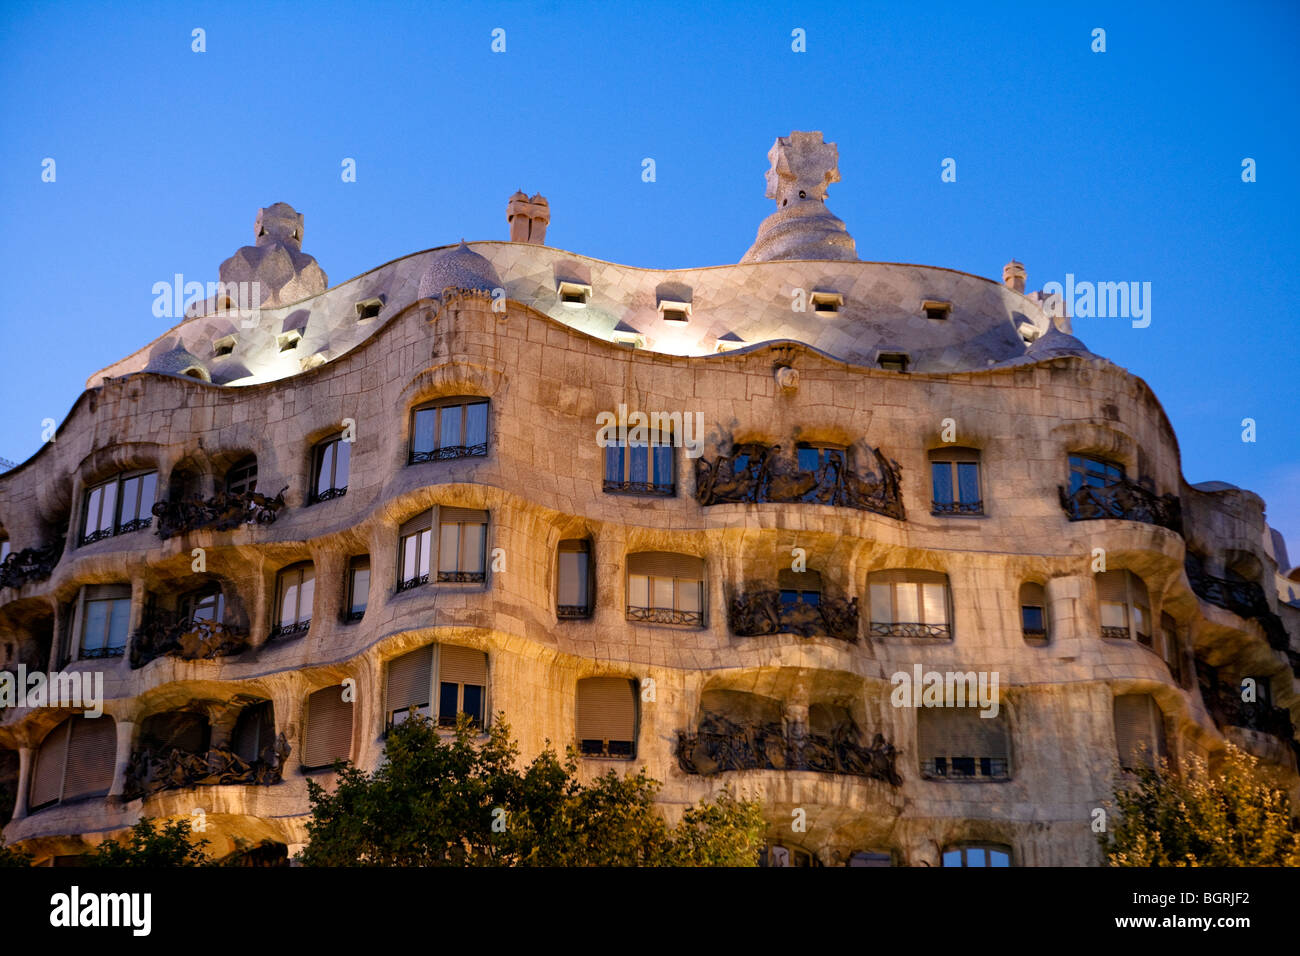 Barcelona - Spanish Art Nouveau movement - Modernisme - Gaudi - Eixample district - Casa Mila or "La Pedrera" Stock Photo